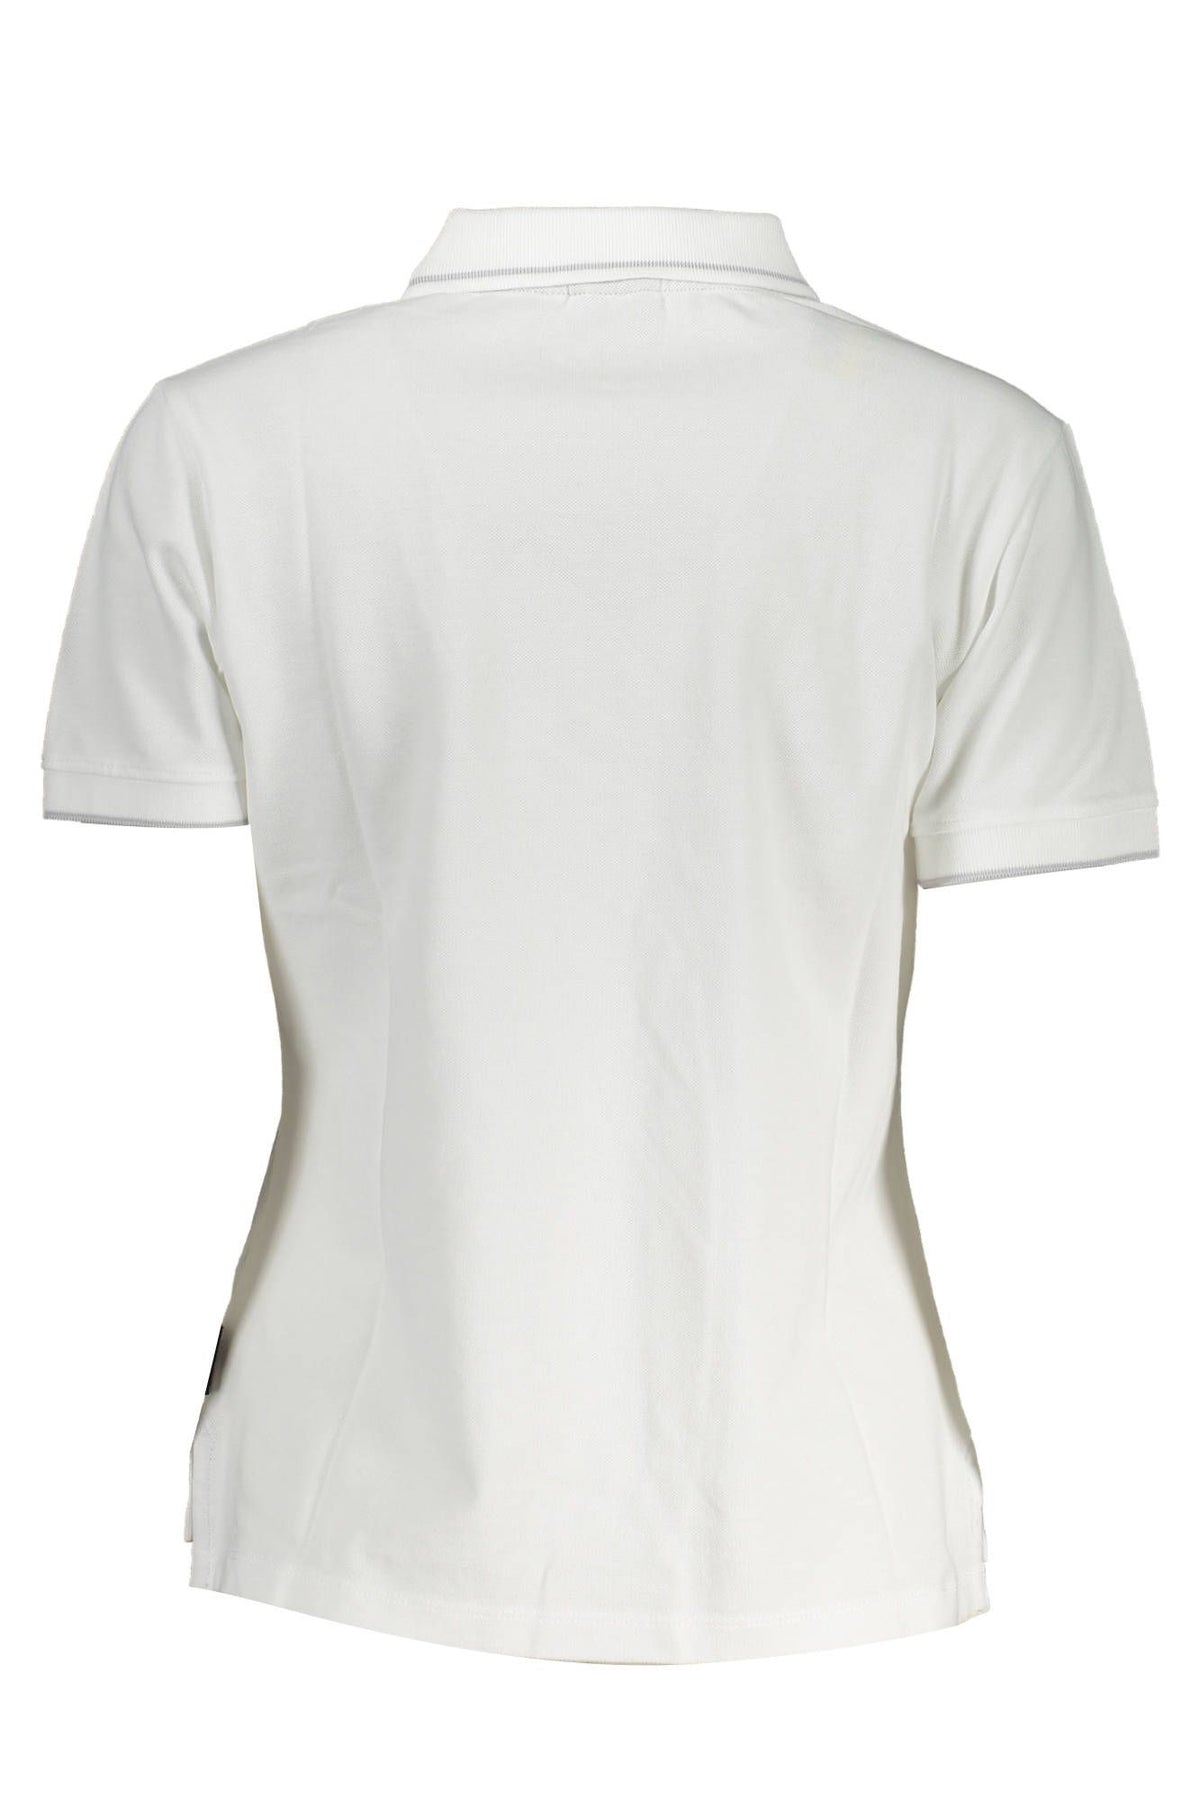 Napapijri – Schickes Polohemd in Weiß mit Kontrastdetails